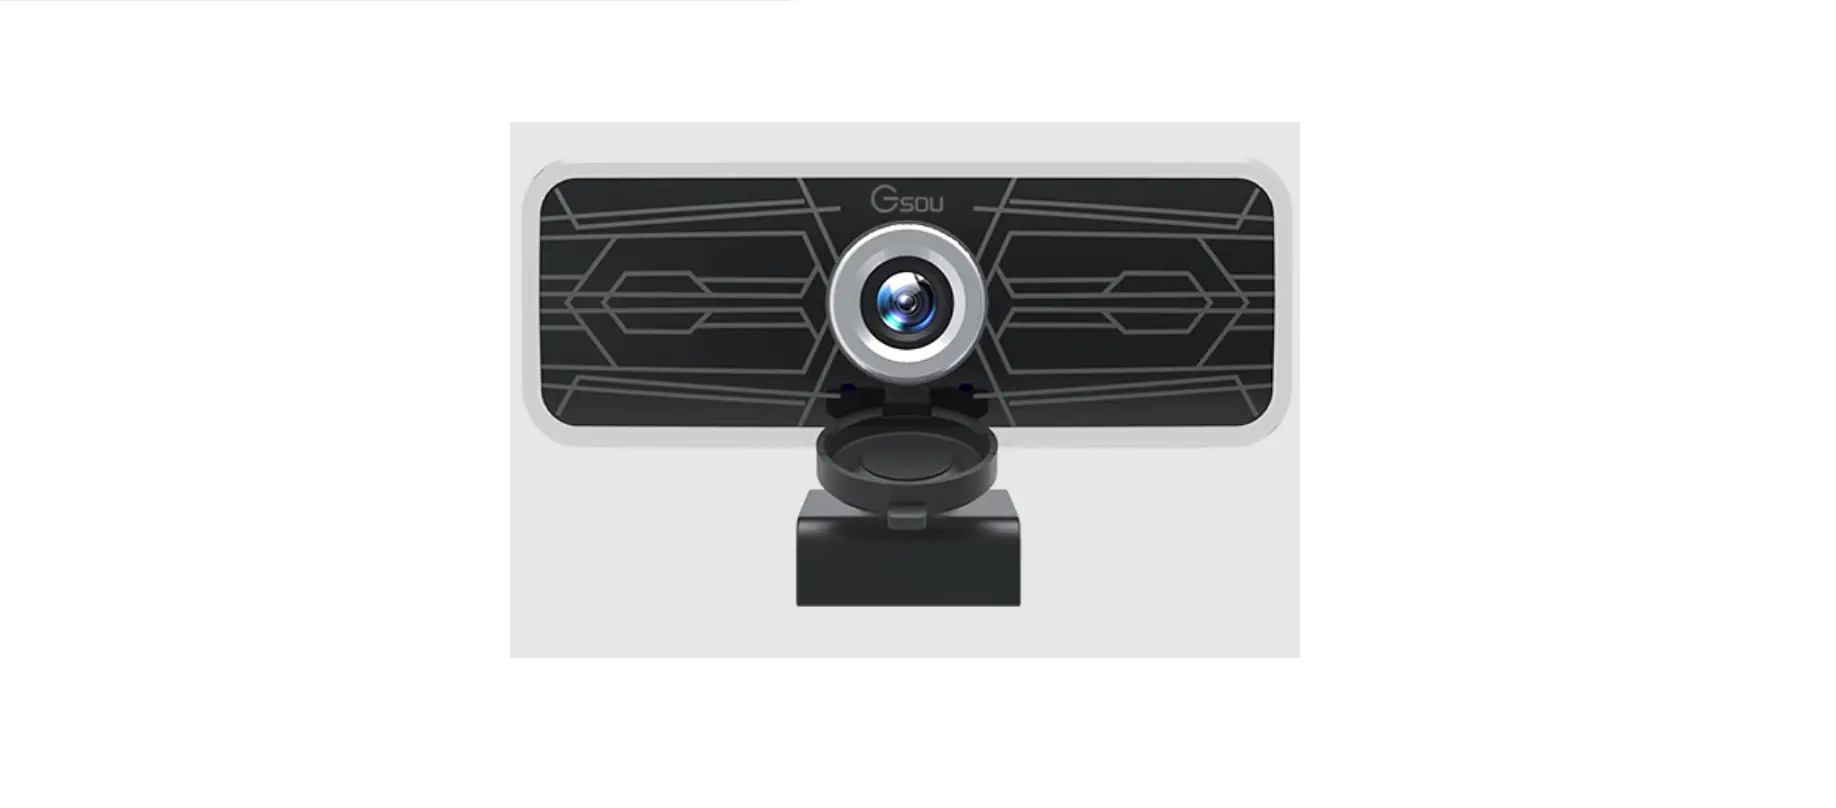 W20 Bluetooth PC Camera 1080P HD COMS PC Webcam